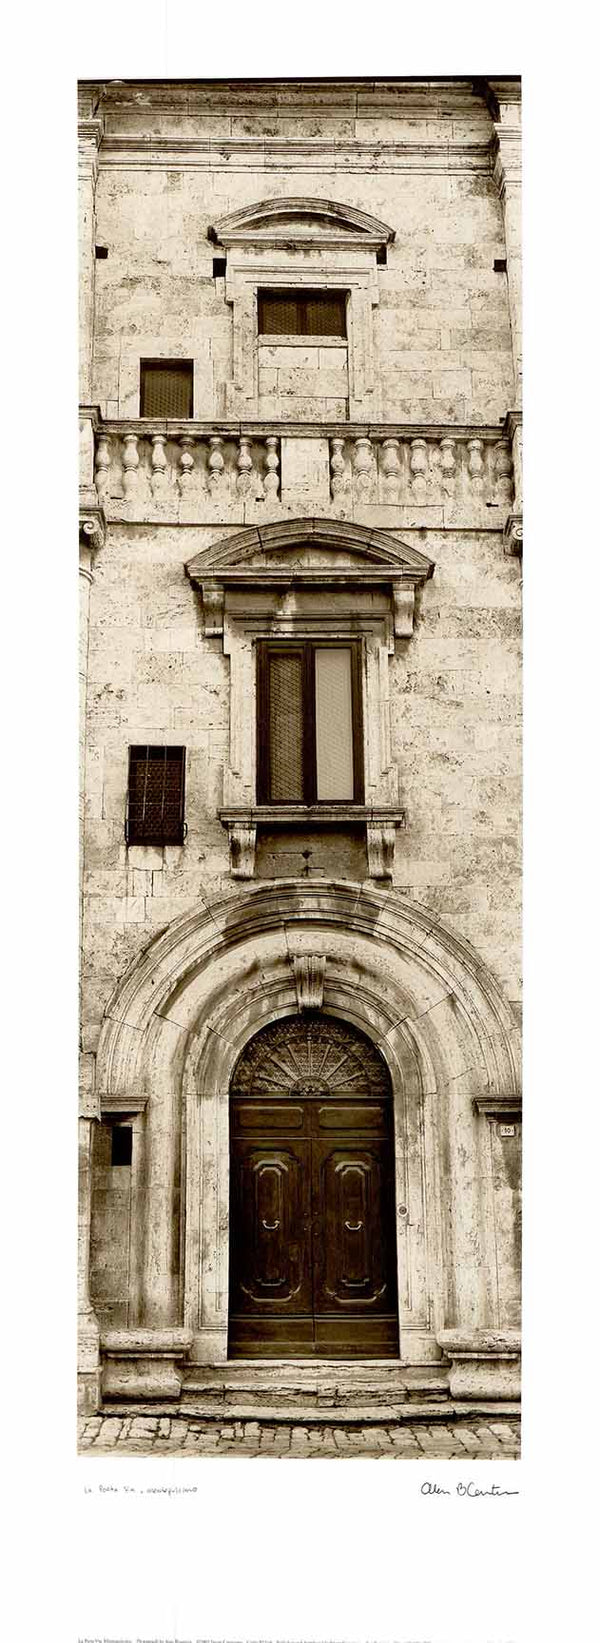 La Porta Via, Montepulciano by Alan Blaustein - 9 X 24 Inches (Art Print)